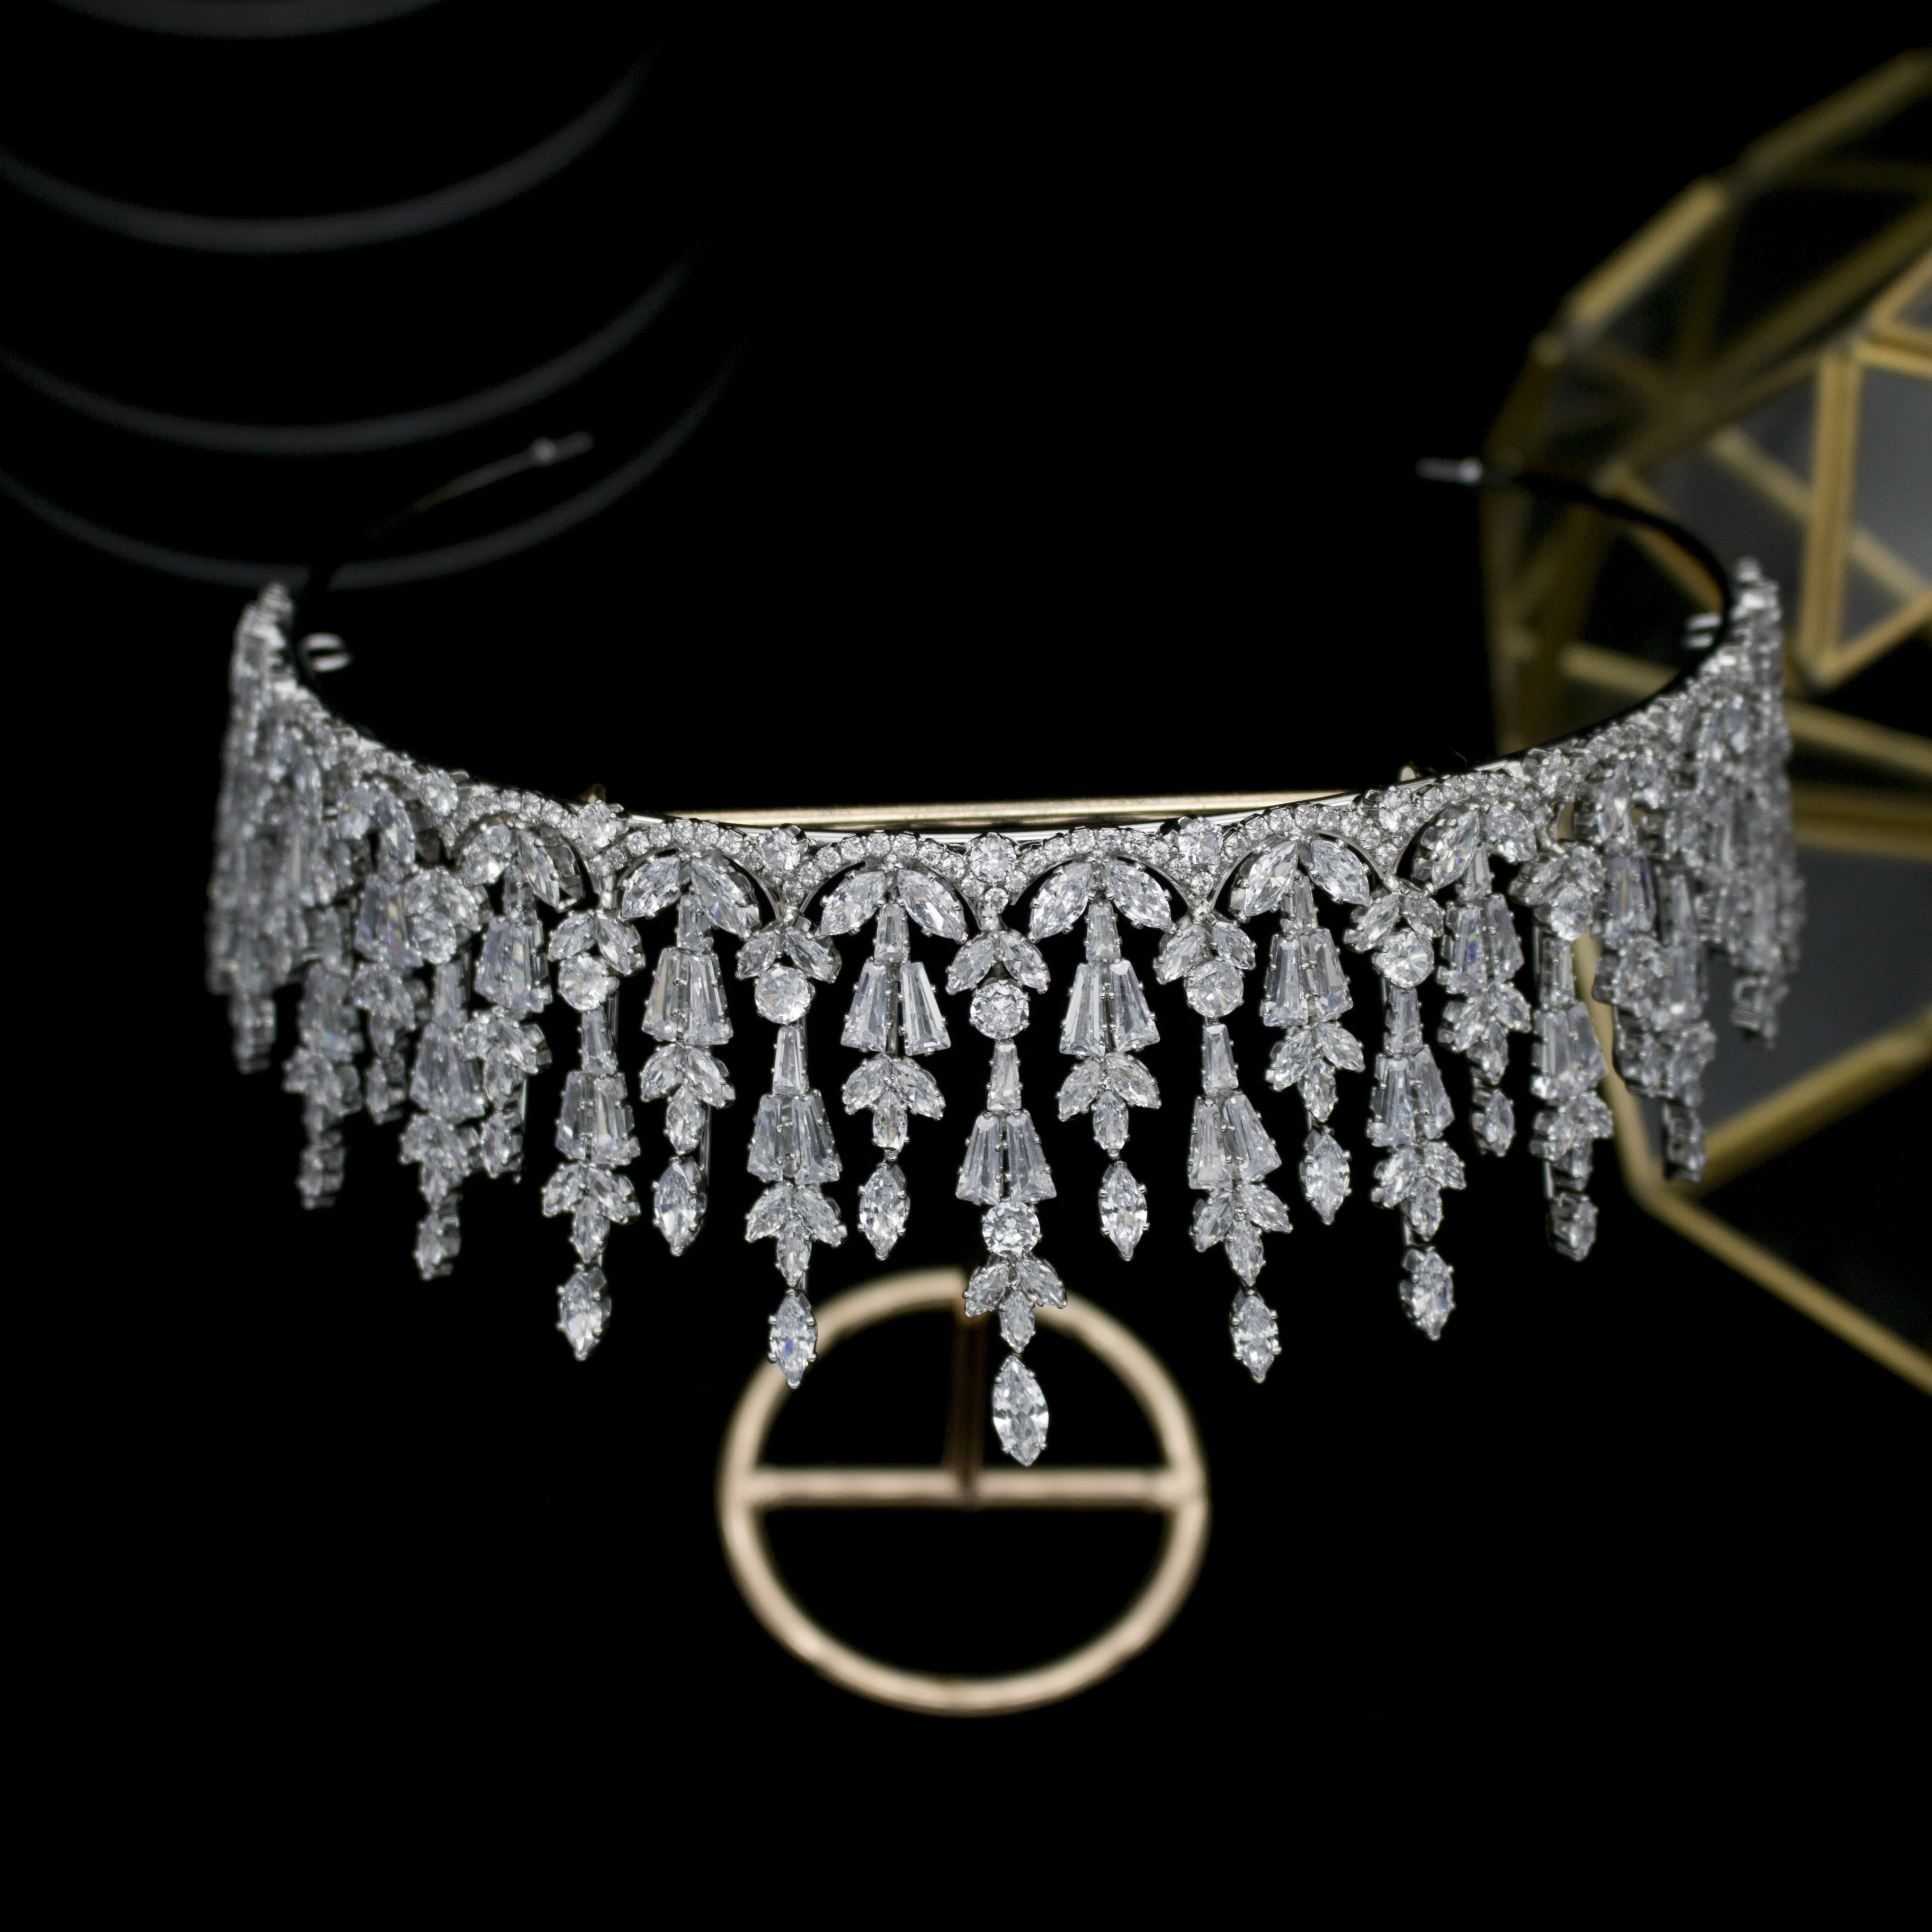 

pageant Silver Magnificent Trendy Tiara Bride Jewelry Crystal Queen King Zircon Rhinestone hair big Round wedding hight crown